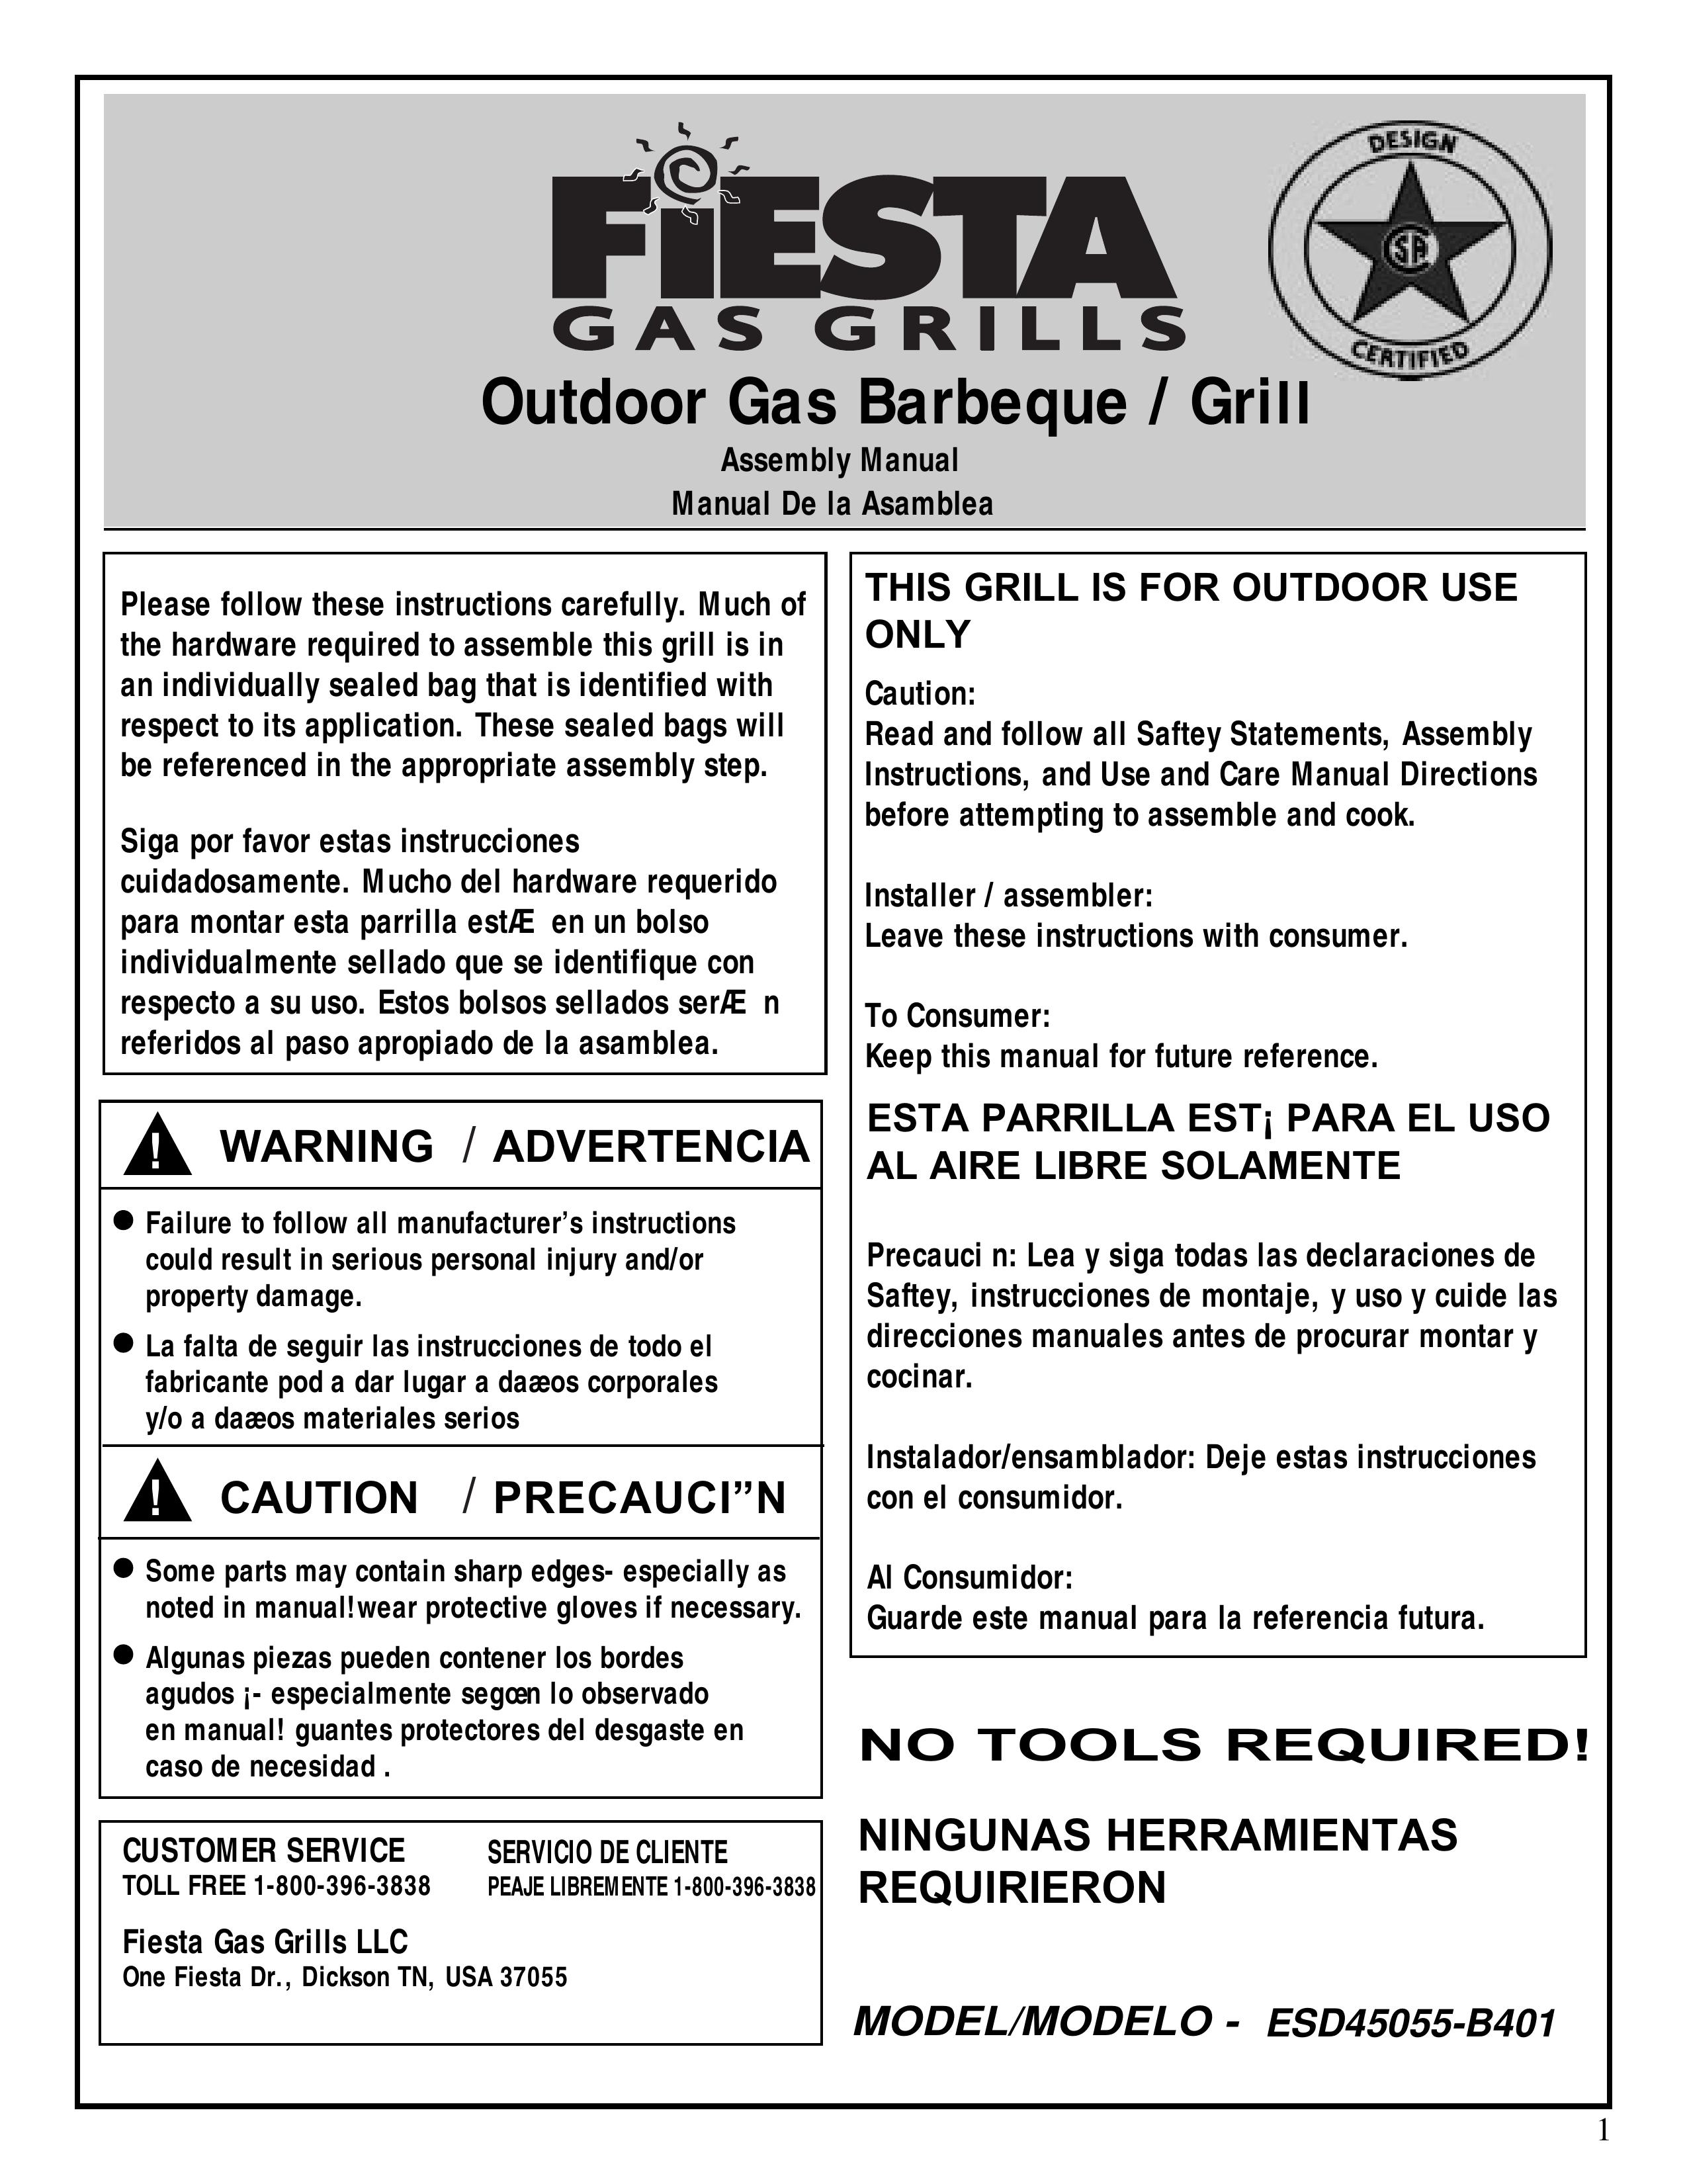 Fiesta ESD45055-B401 Gas Grill User Manual